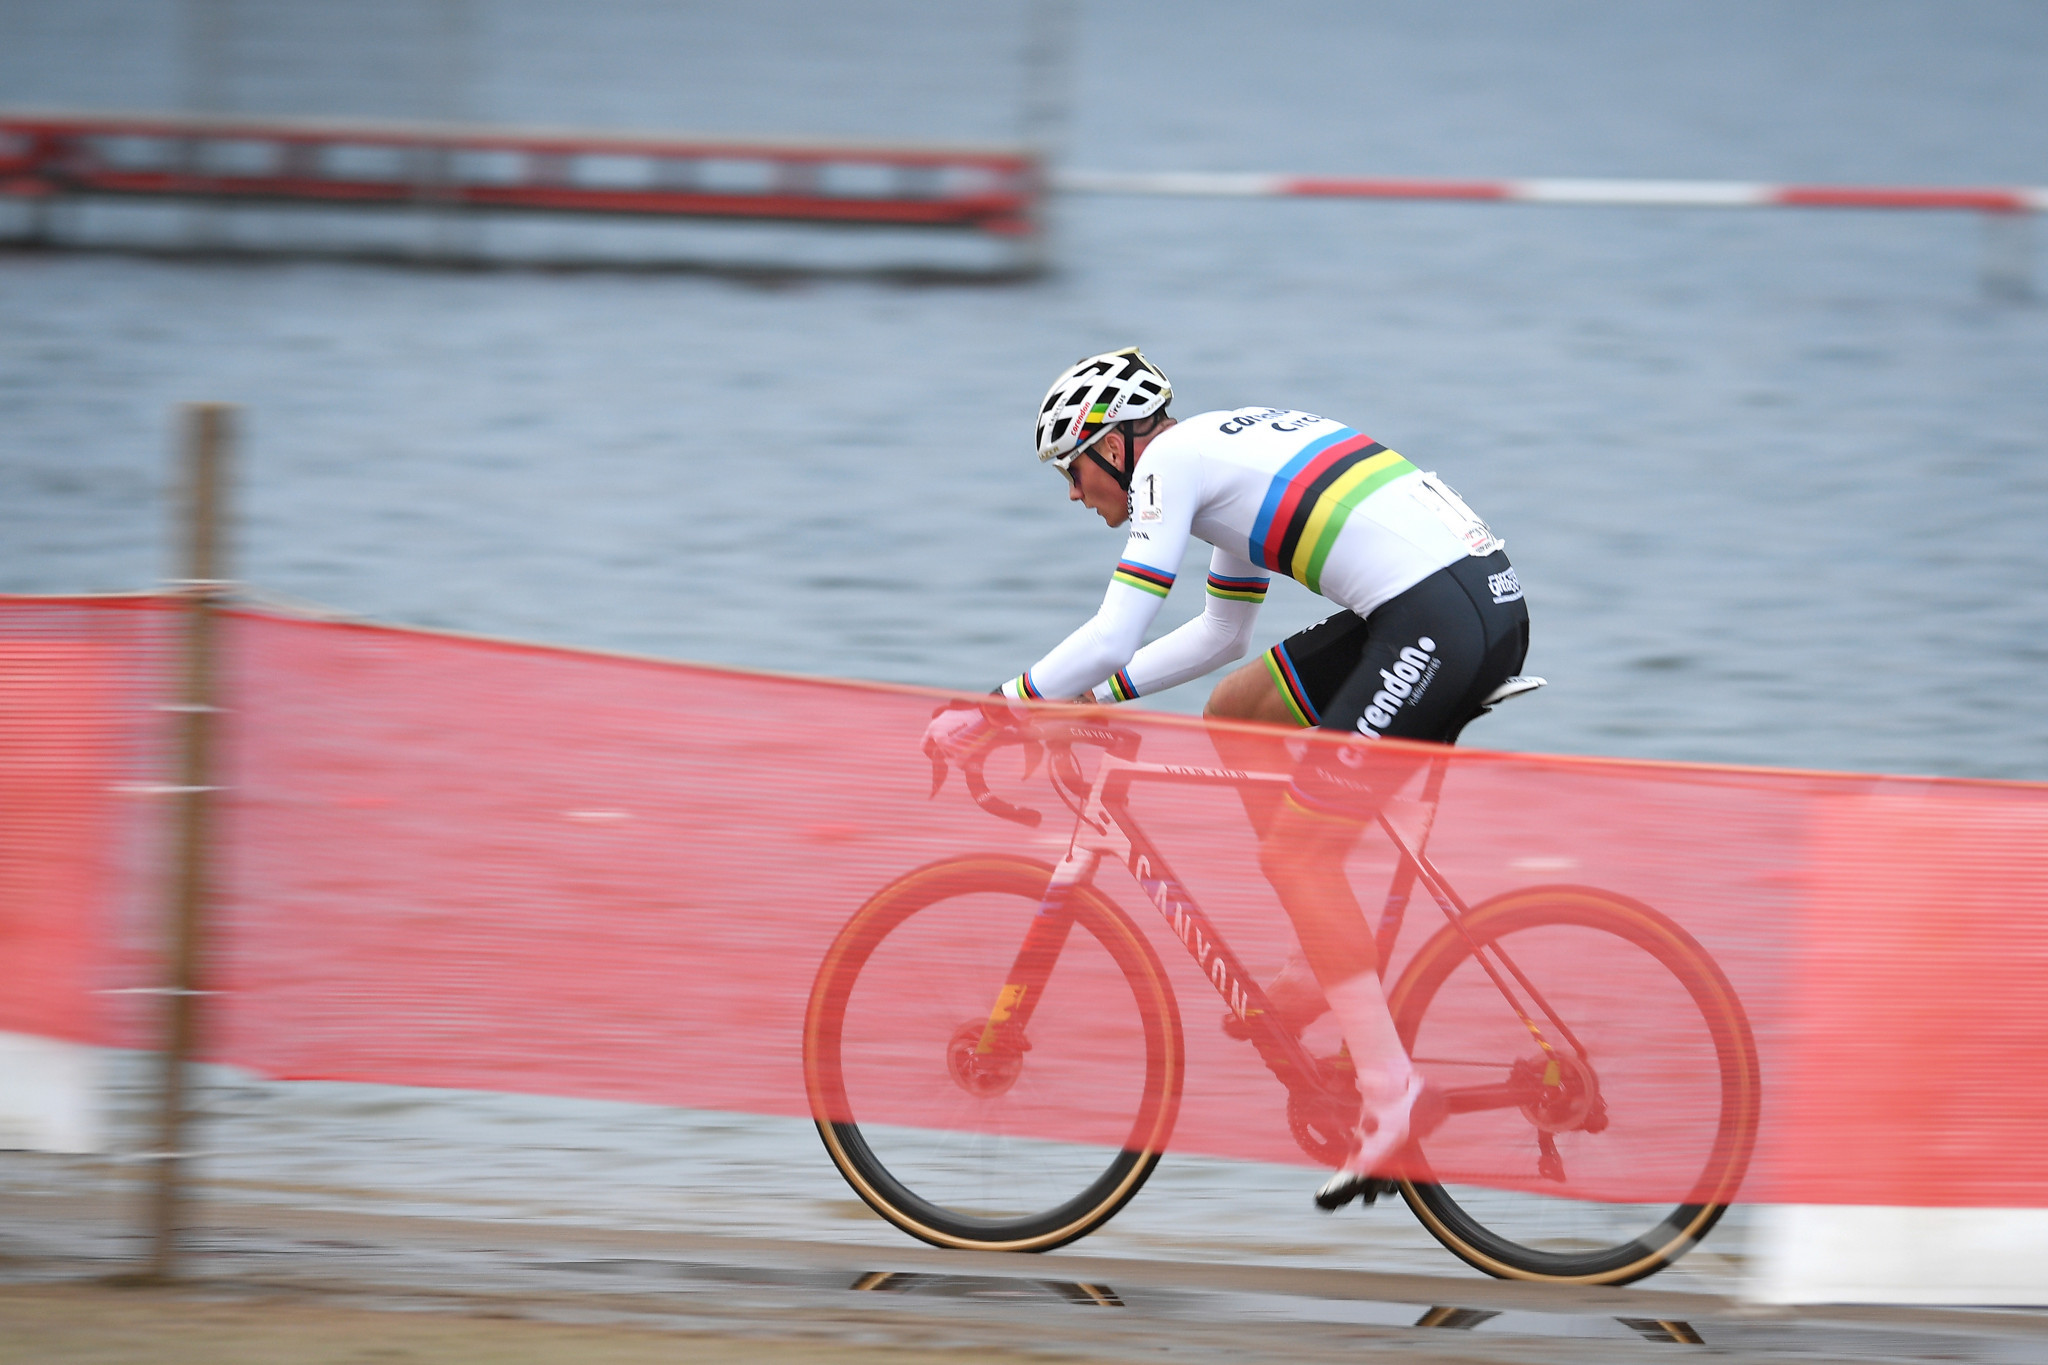 Van der Poel seeking to extend UCI Cyclo-cross World Cup win streak in Namur